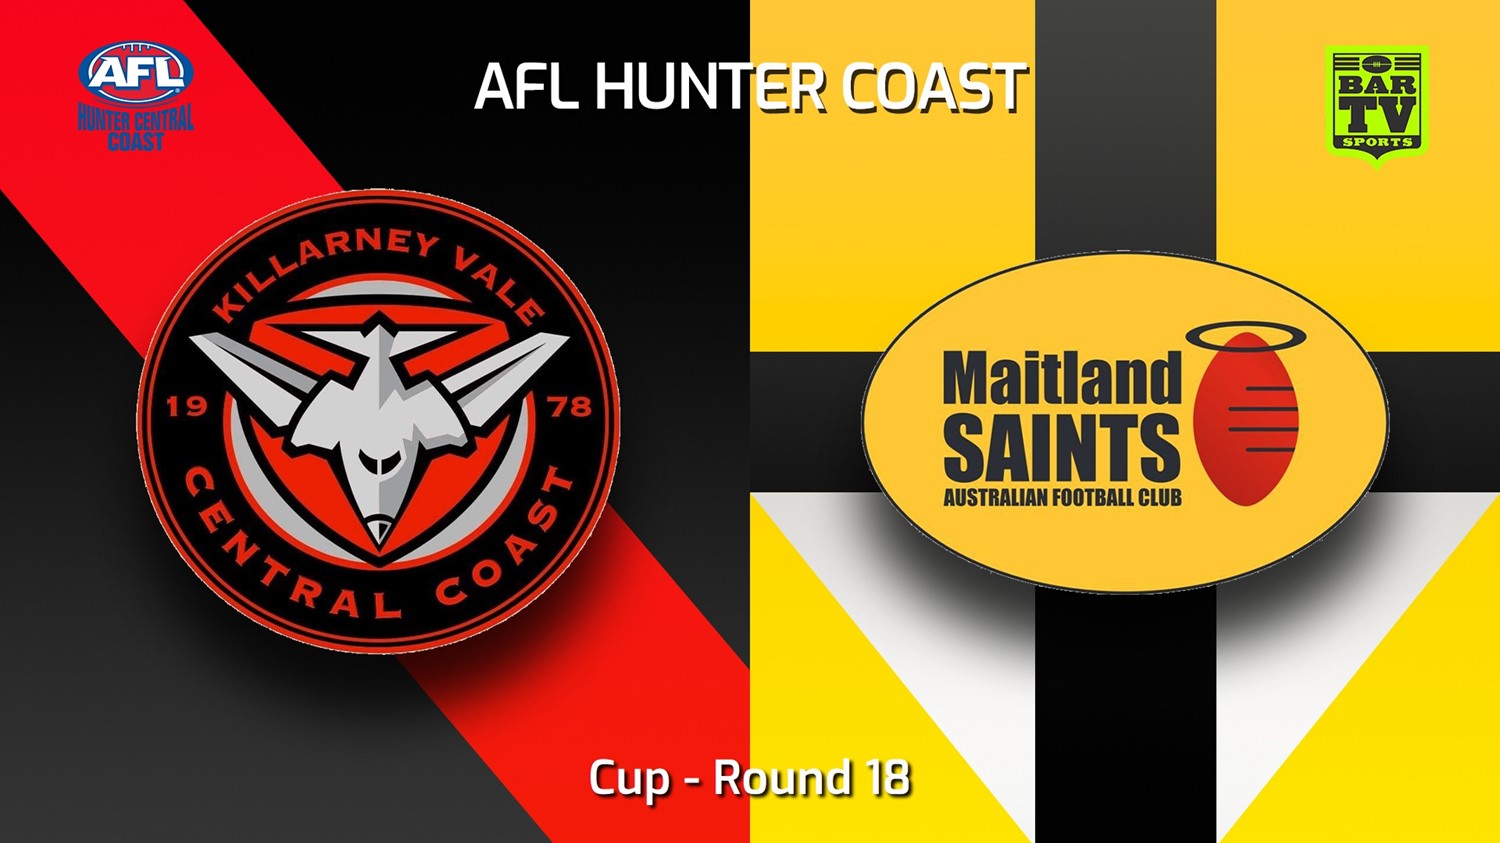 230819-AFL Hunter Central Coast Round 18 - Cup - Killarney Vale Bombers v Maitland Saints Minigame Slate Image